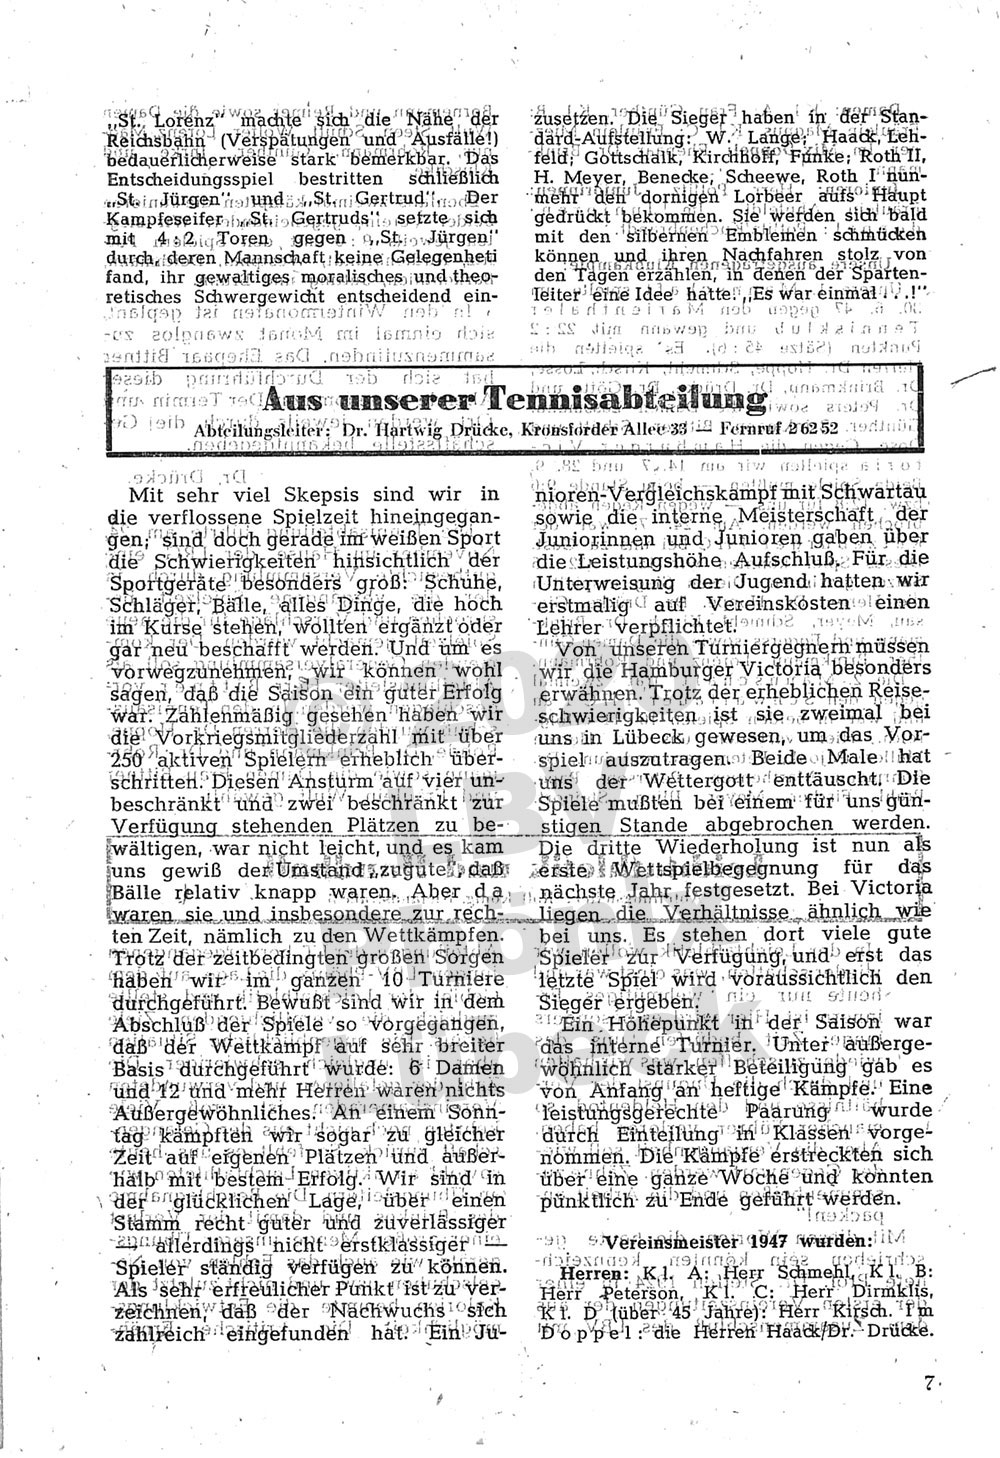 LBV Phönix Rundschreiben - Dezember 1947